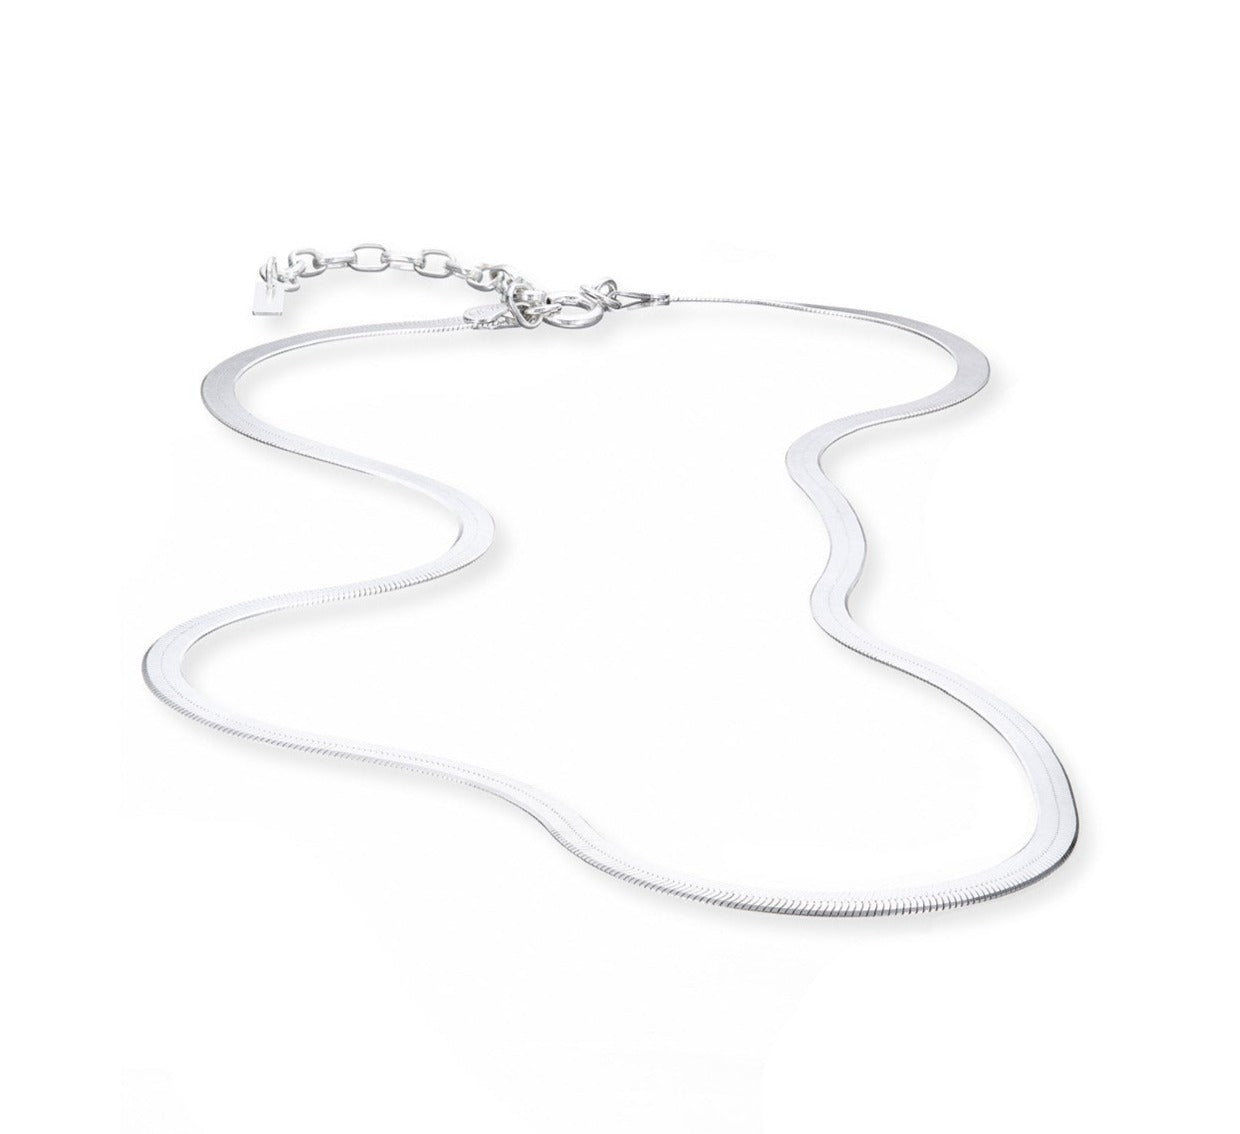 Herringbone Chain - Sterling Silver